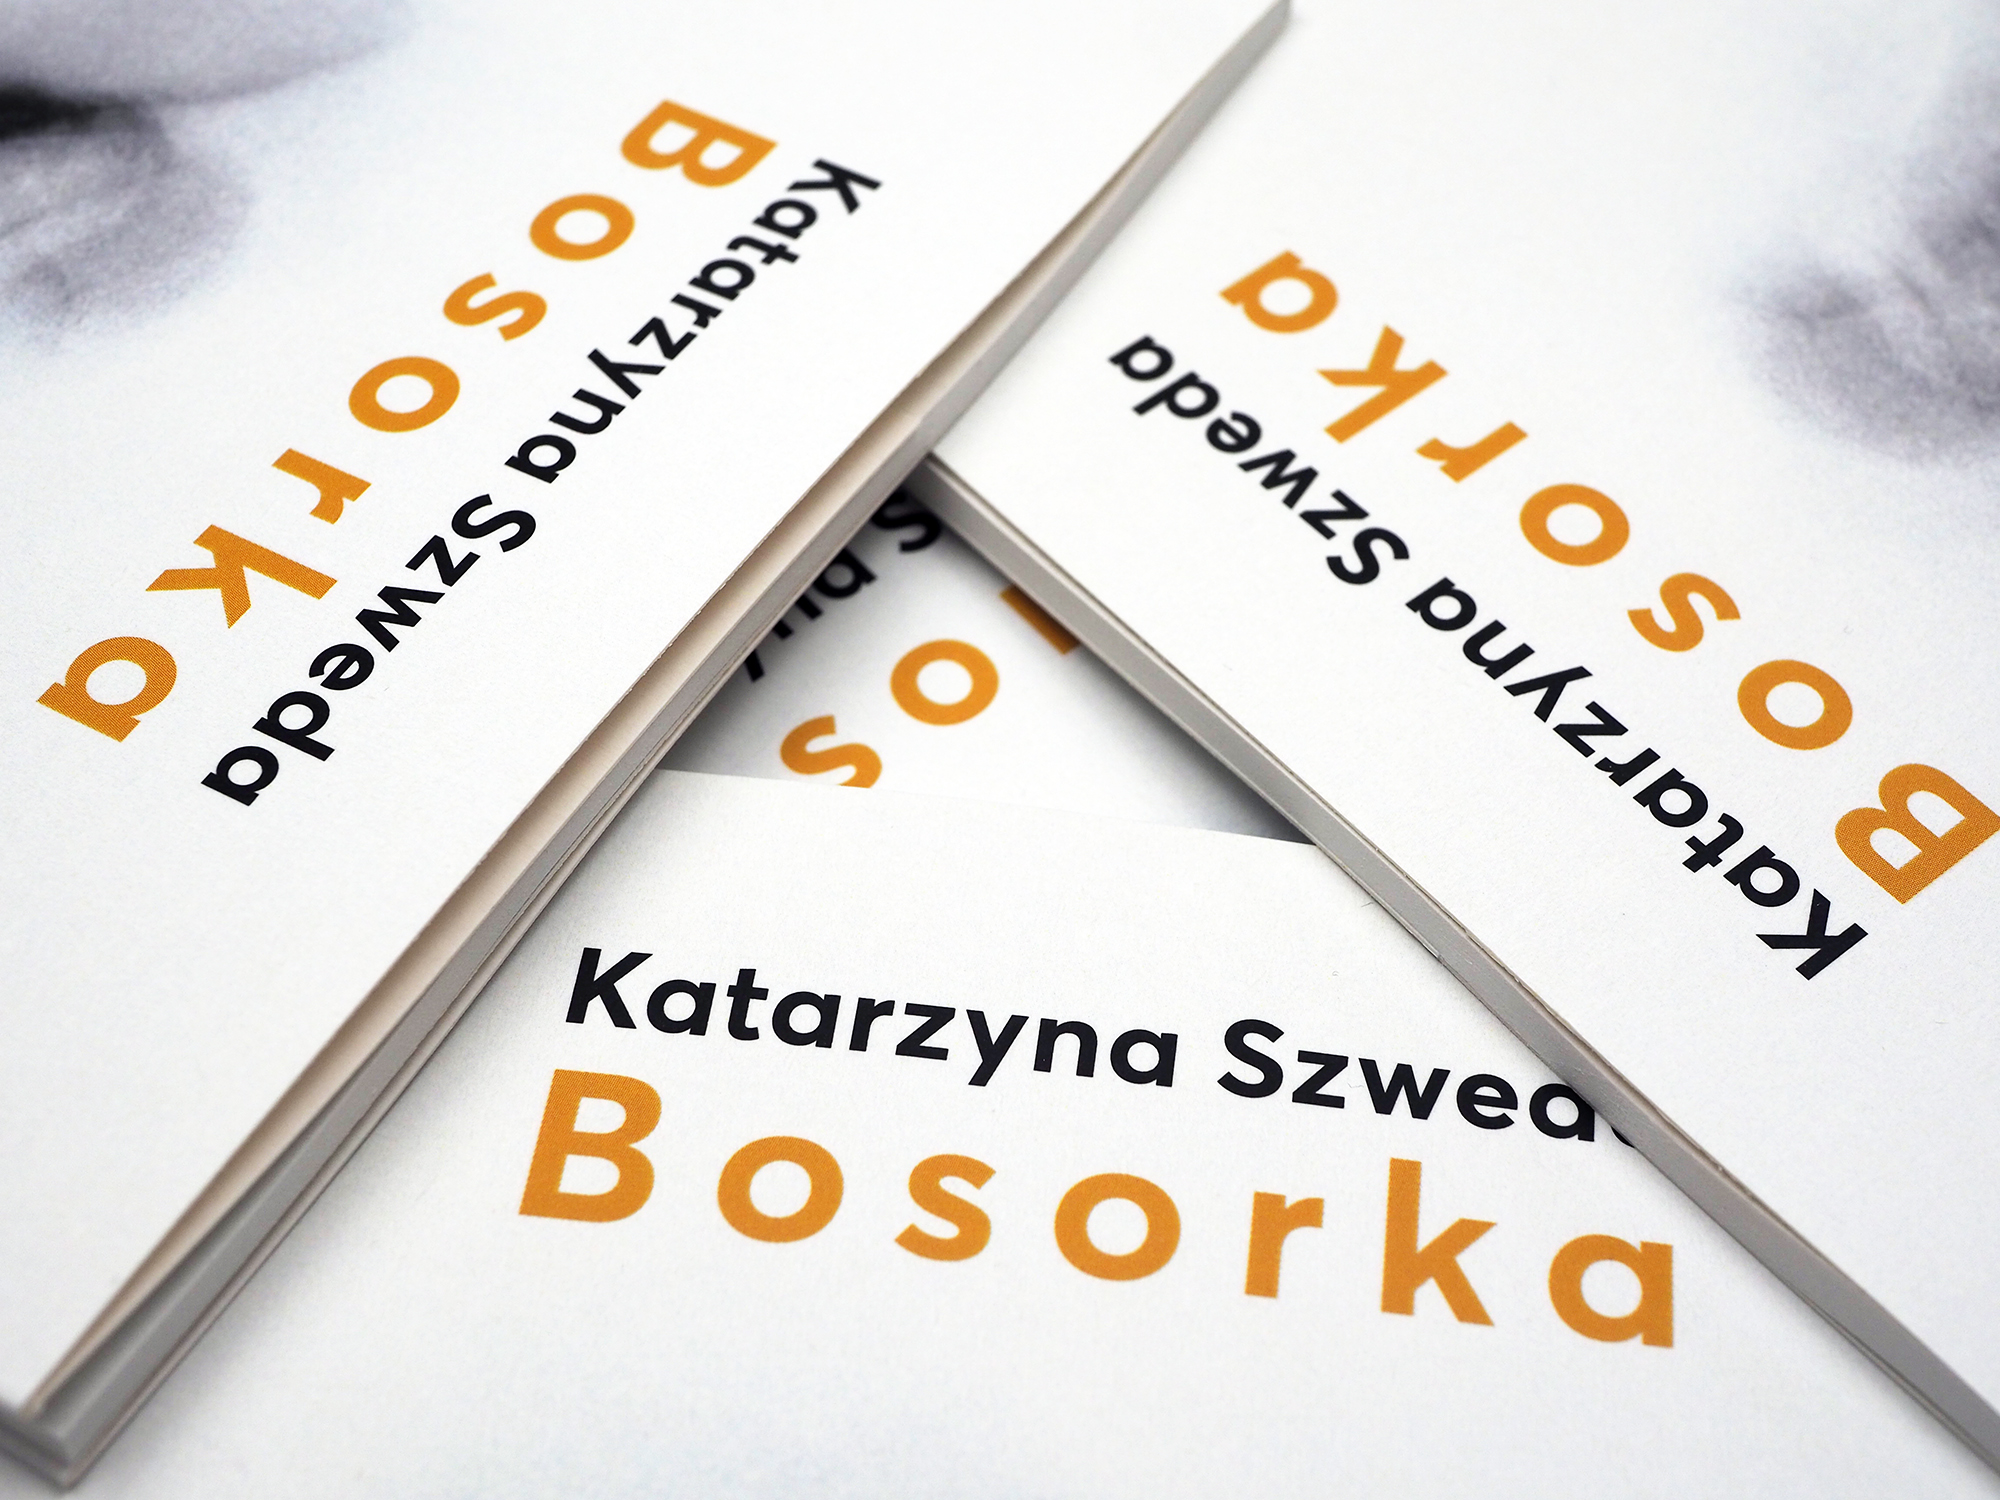 Bosorka for ios download